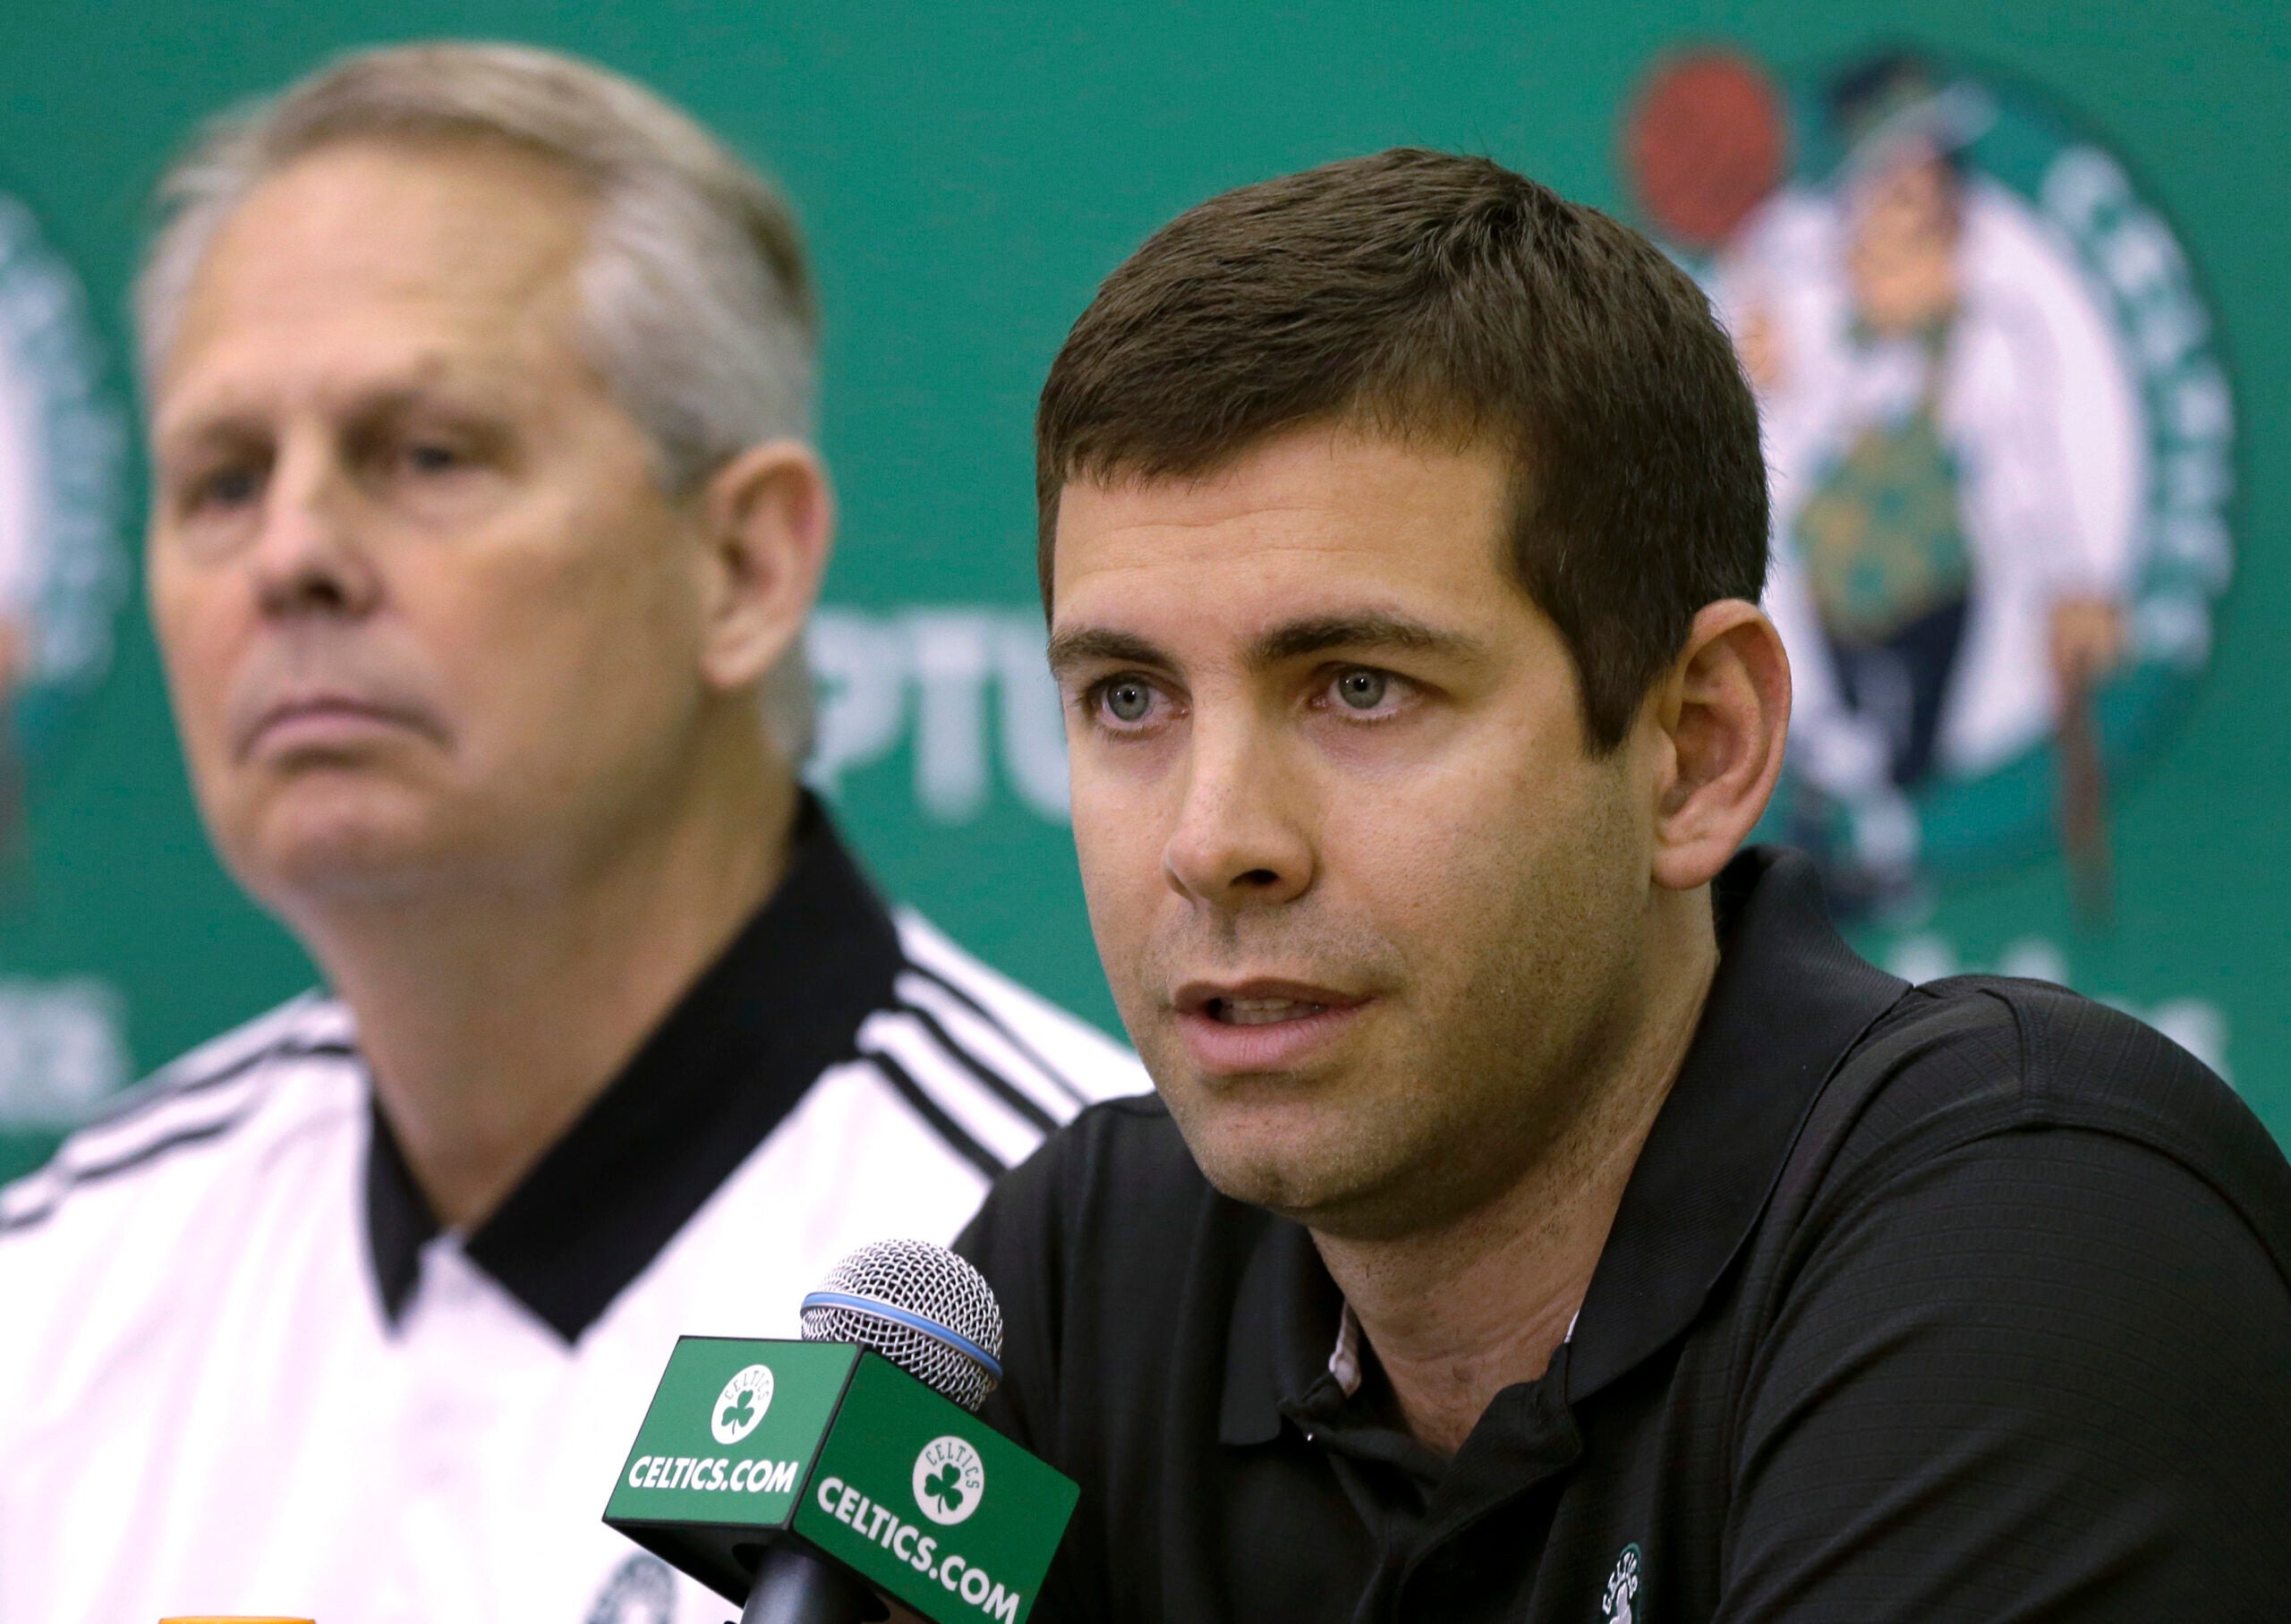 What Brad Stevens said about choosing his successor as Celtics coach